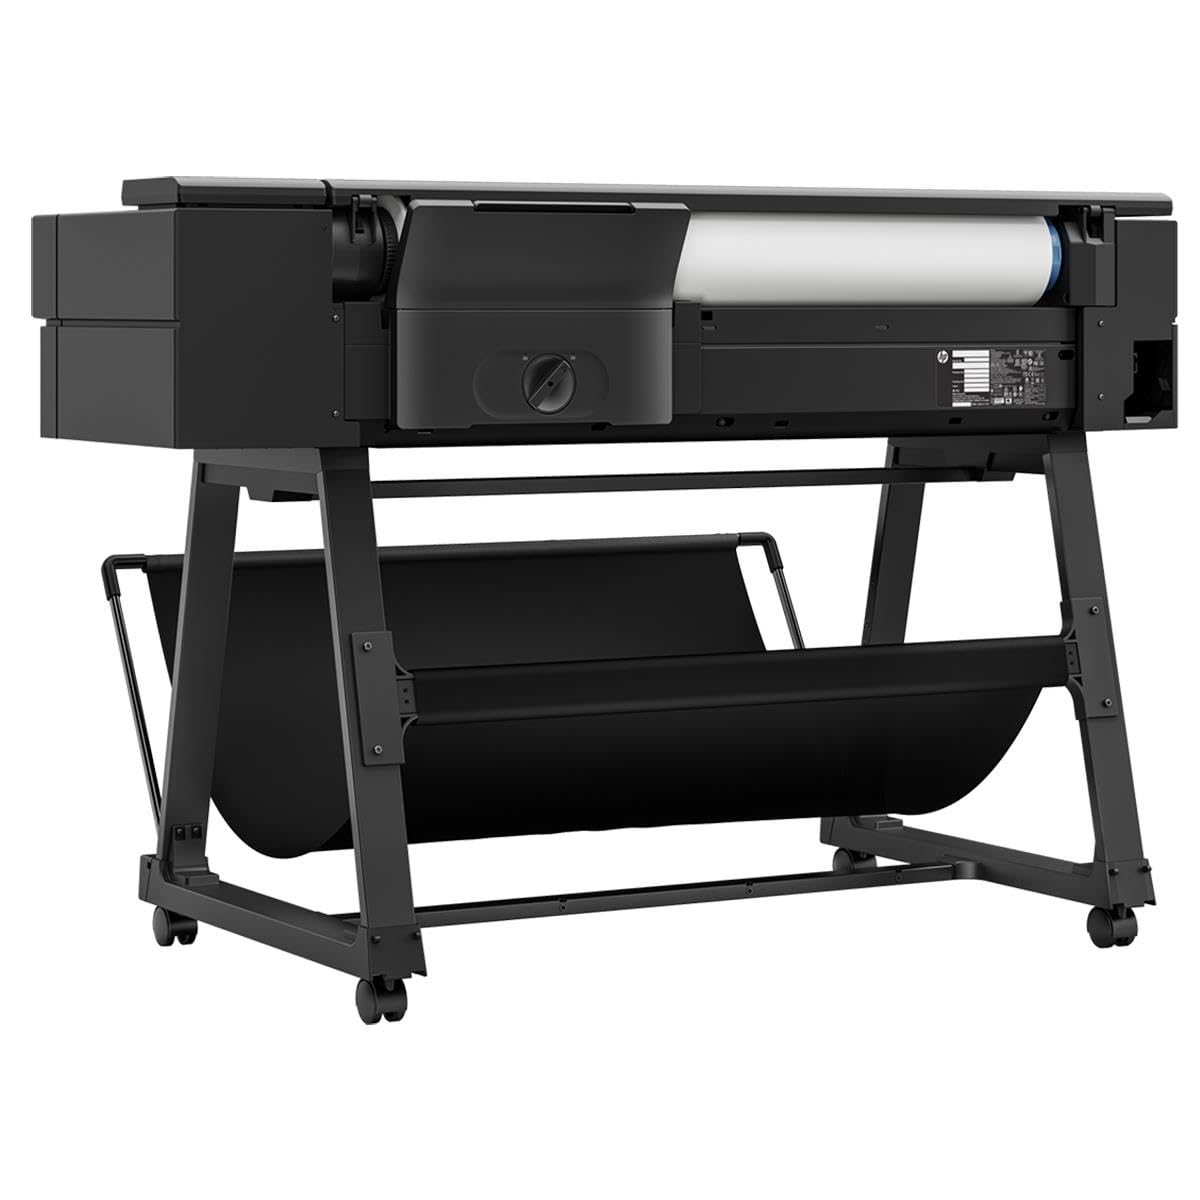 HP DesignJet T850 Large Format 36-inch Color Plotter Printer (2Y9H0A)